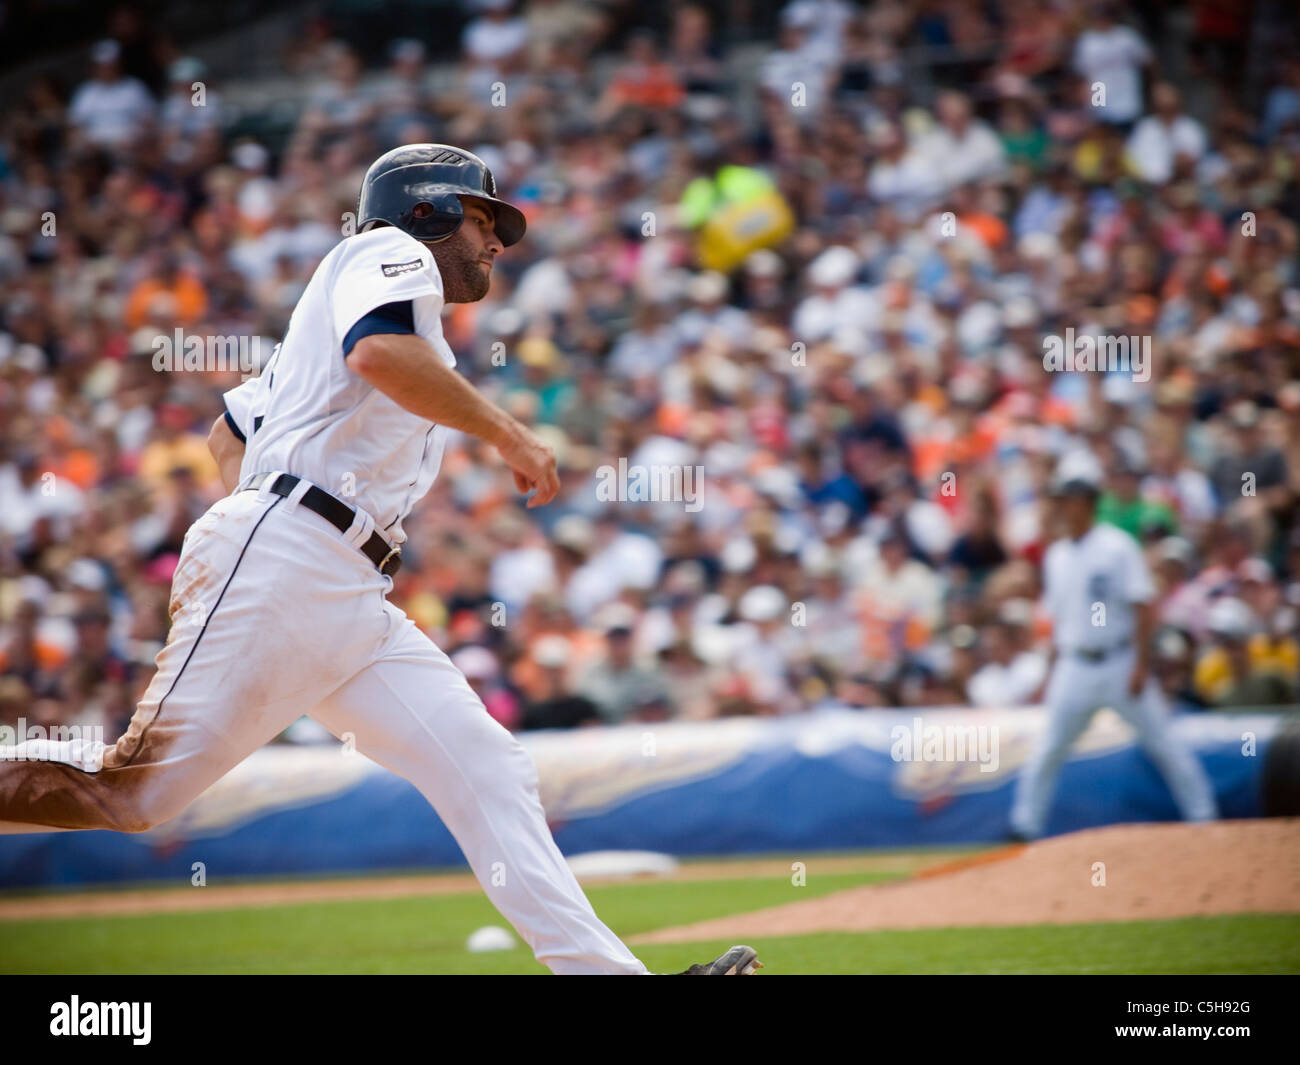 Detroit Tigers catcher Alex Avila heading towards 3rd base. Stock Photo